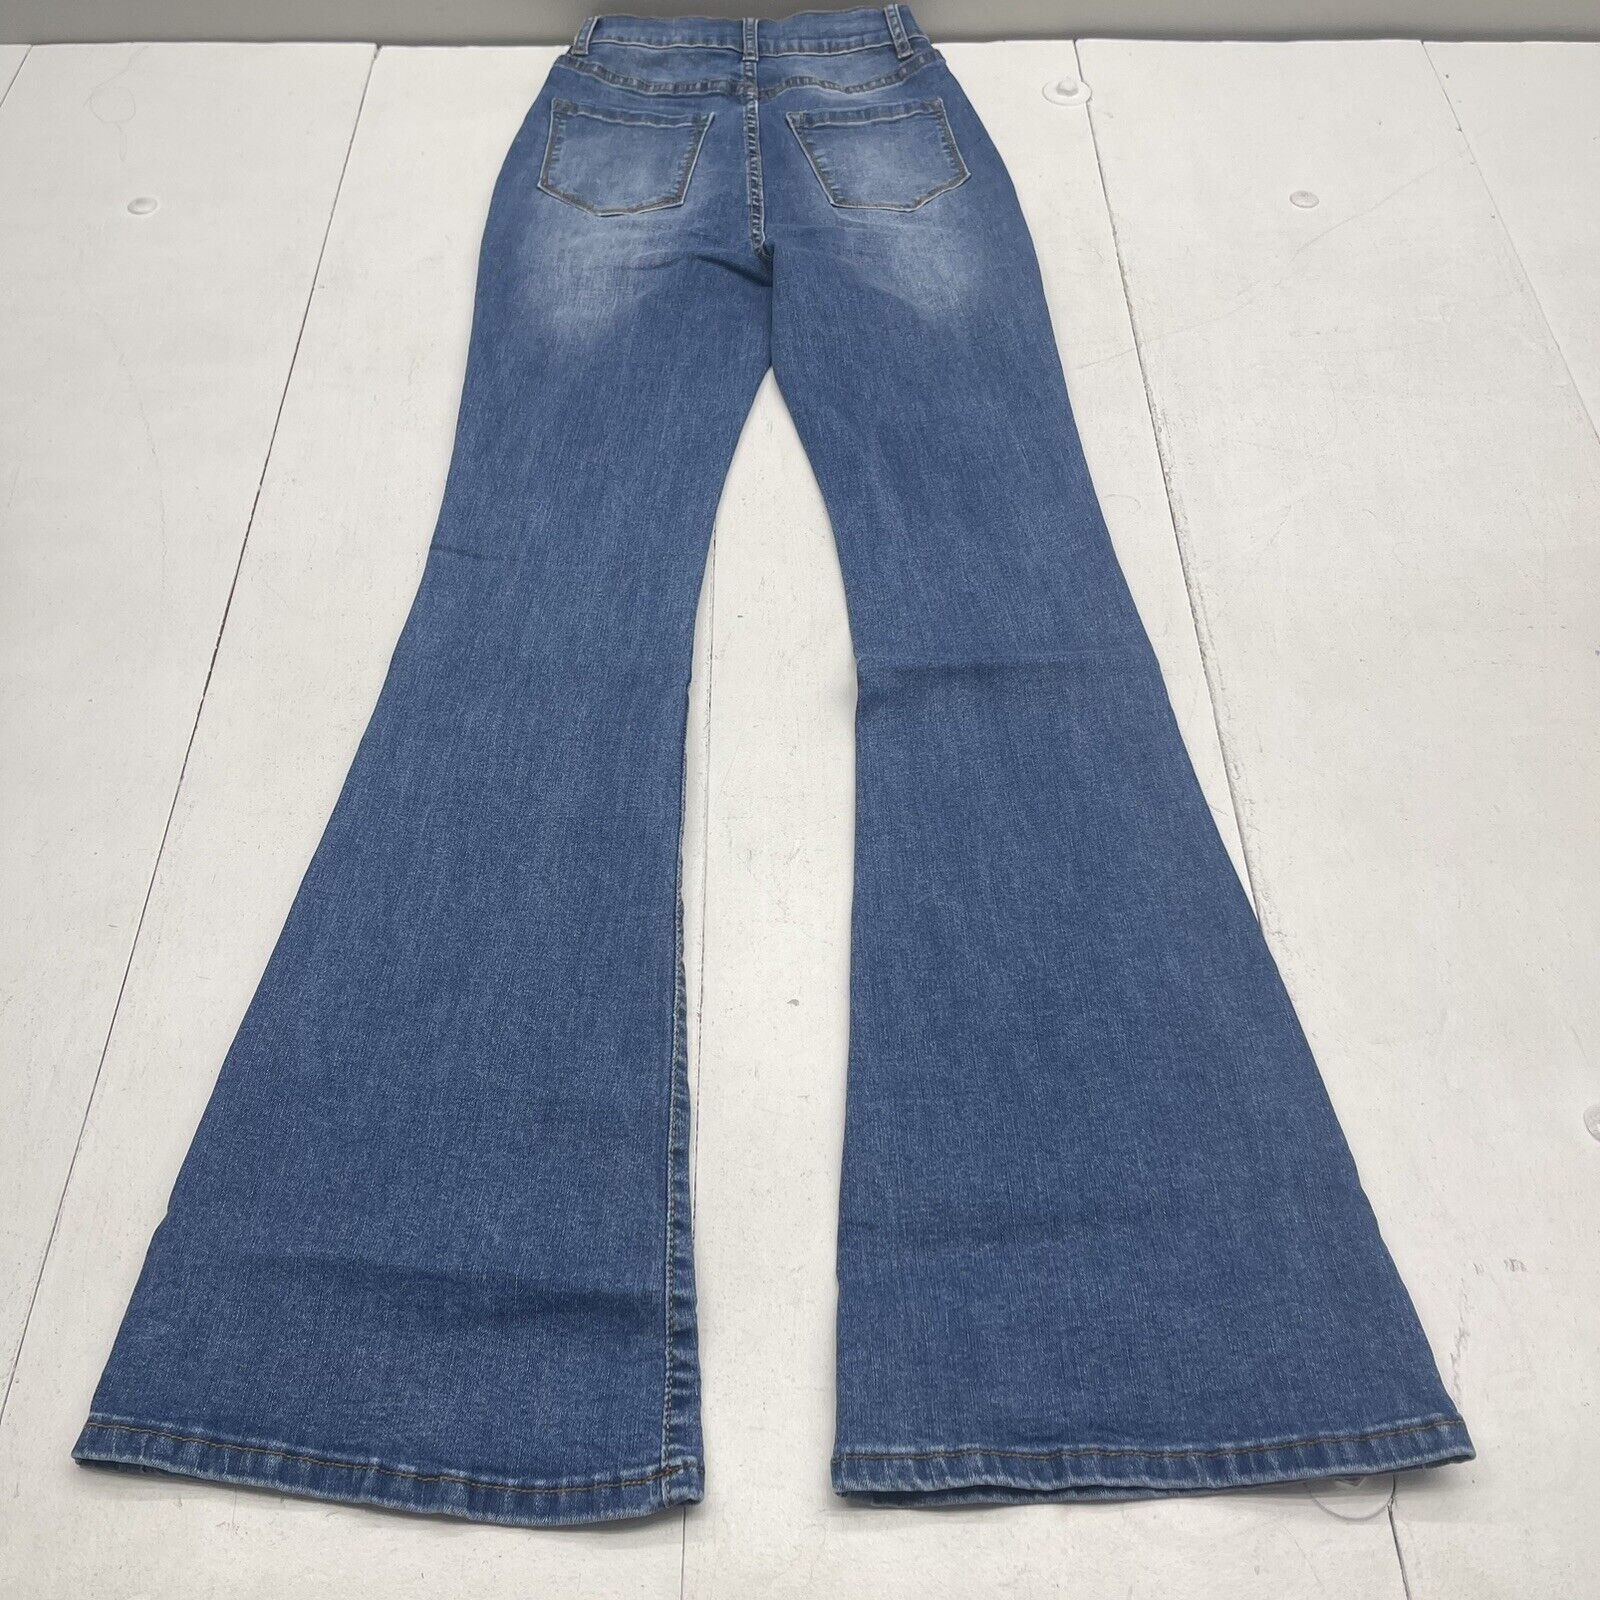 SHEIN Blue Denim High Rise Bell Bottom Jeans Women's Size 27 New - beyond  exchange